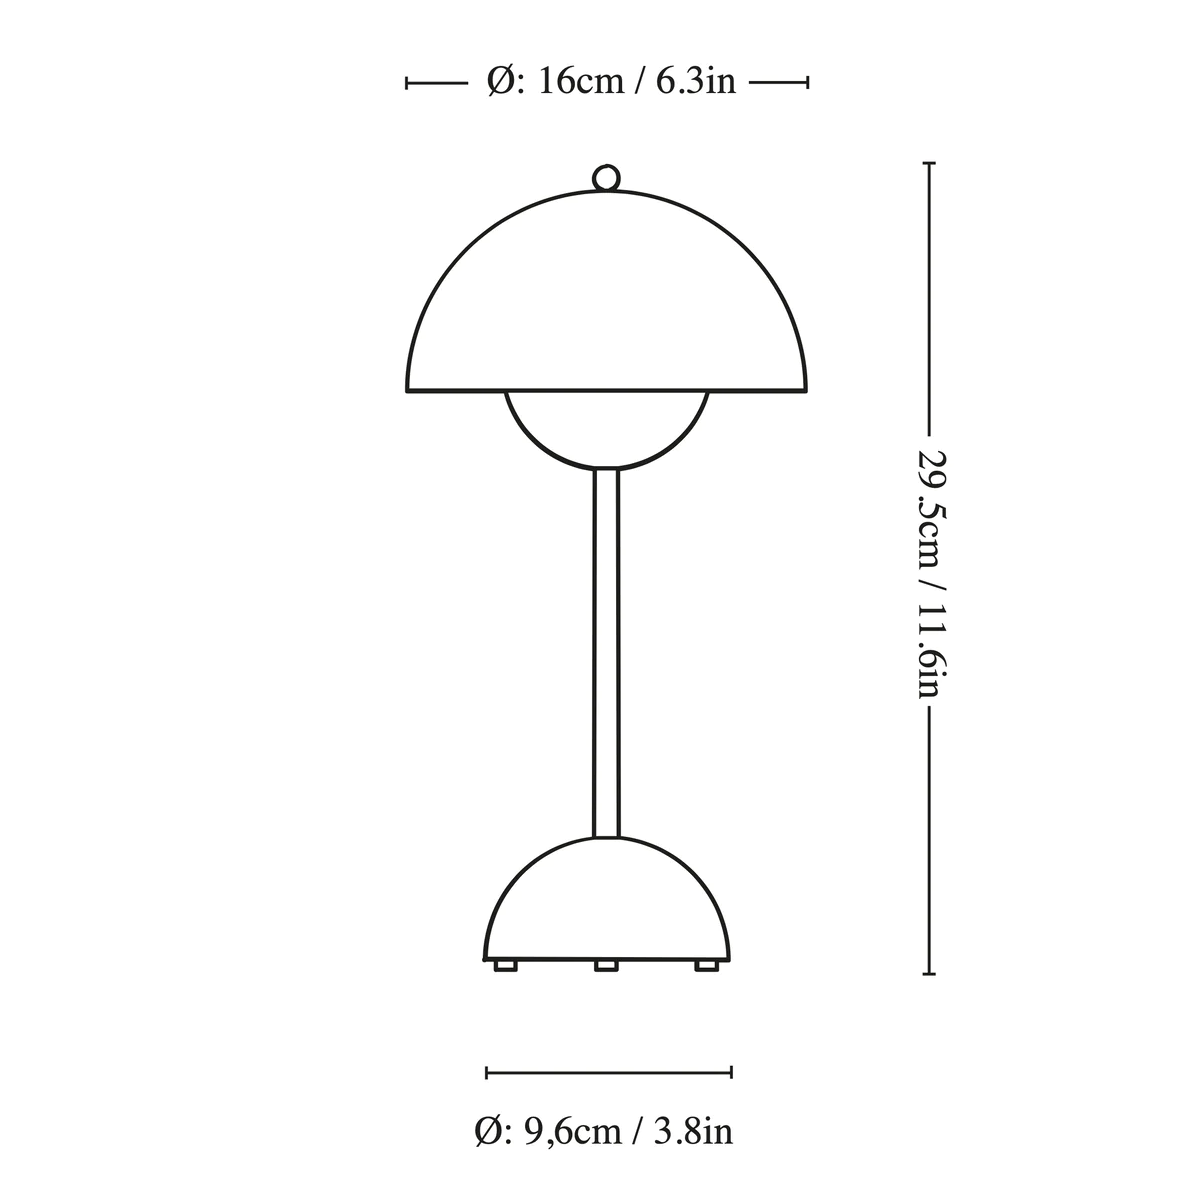 Chrome Flowerpot Portable LED Table Lamp